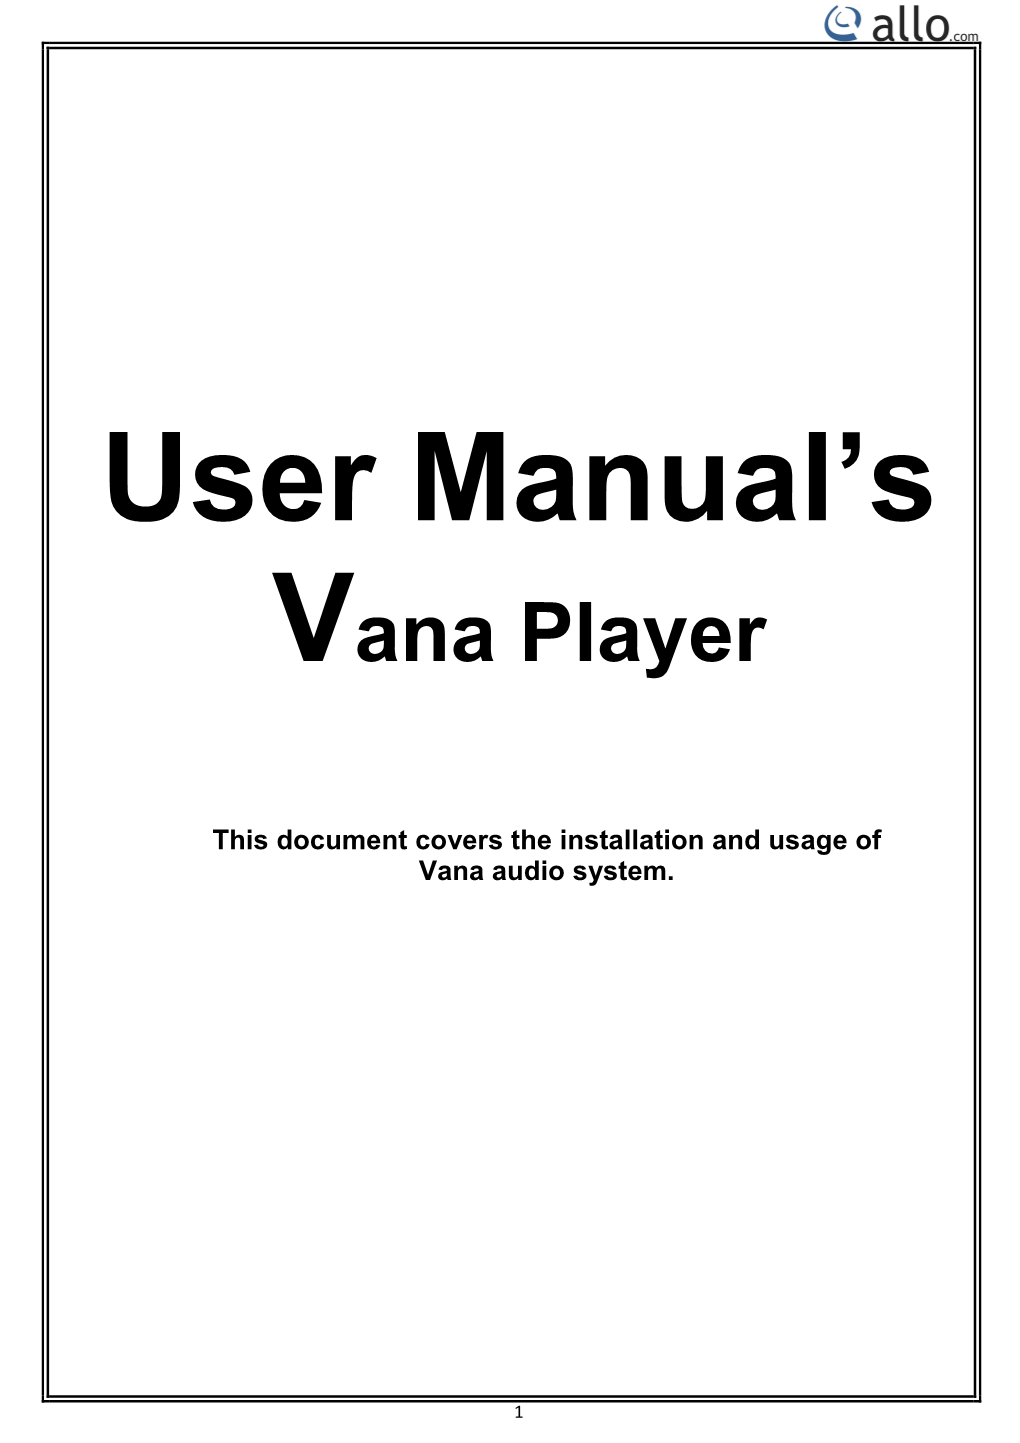 User Manual's Vana Player